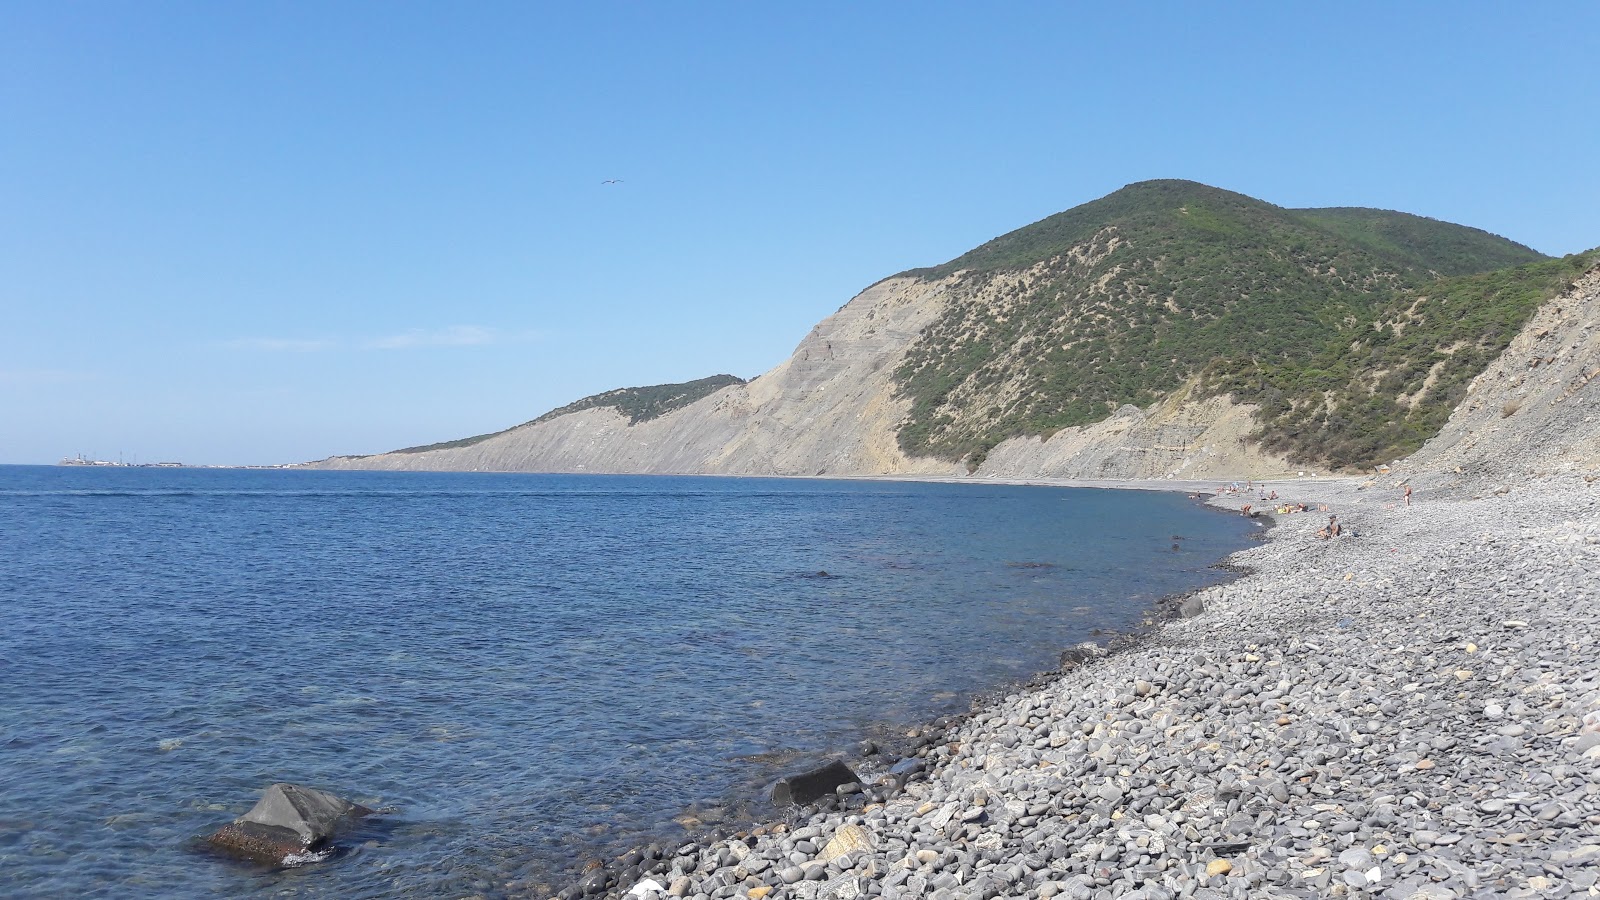 Photo of Laguna I with gray pebble surface